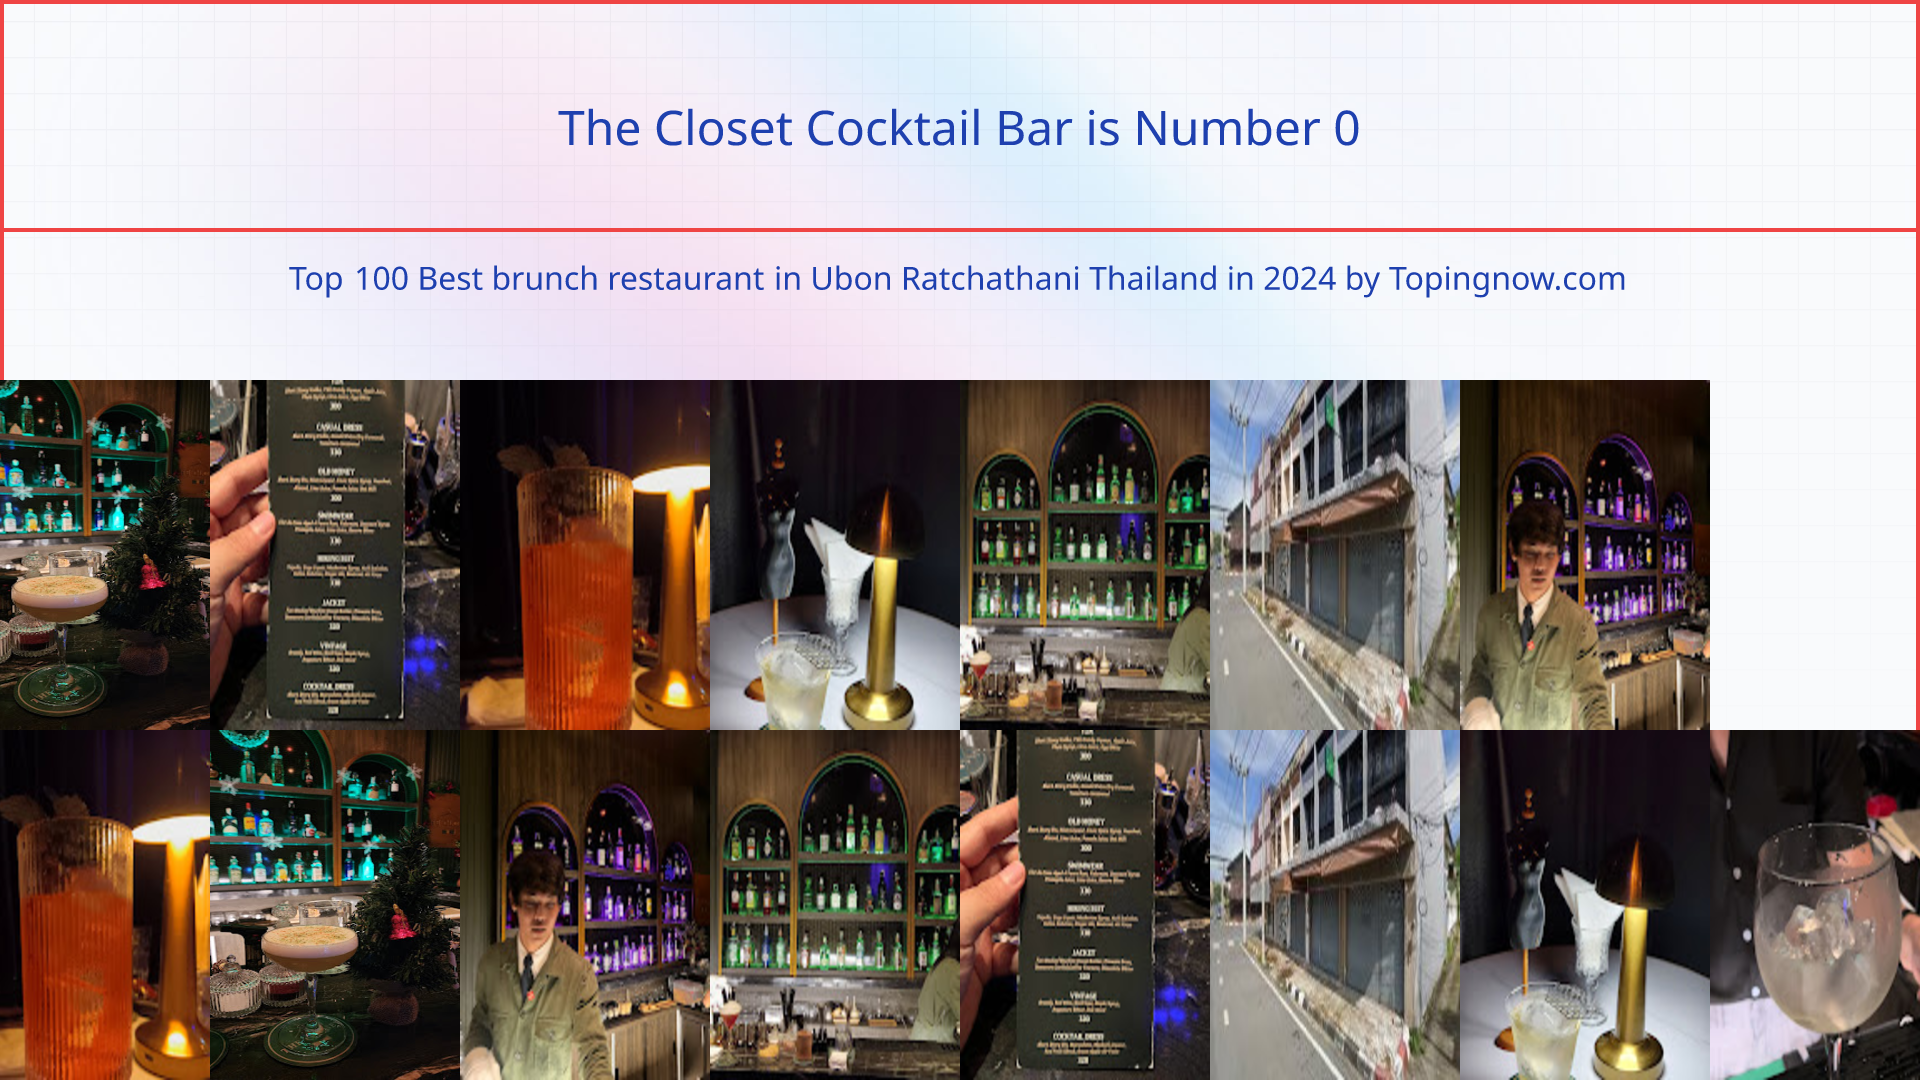 The Closet Cocktail Bar: Top 100 Best brunch restaurant in Ubon Ratchathani Thailand in 2024